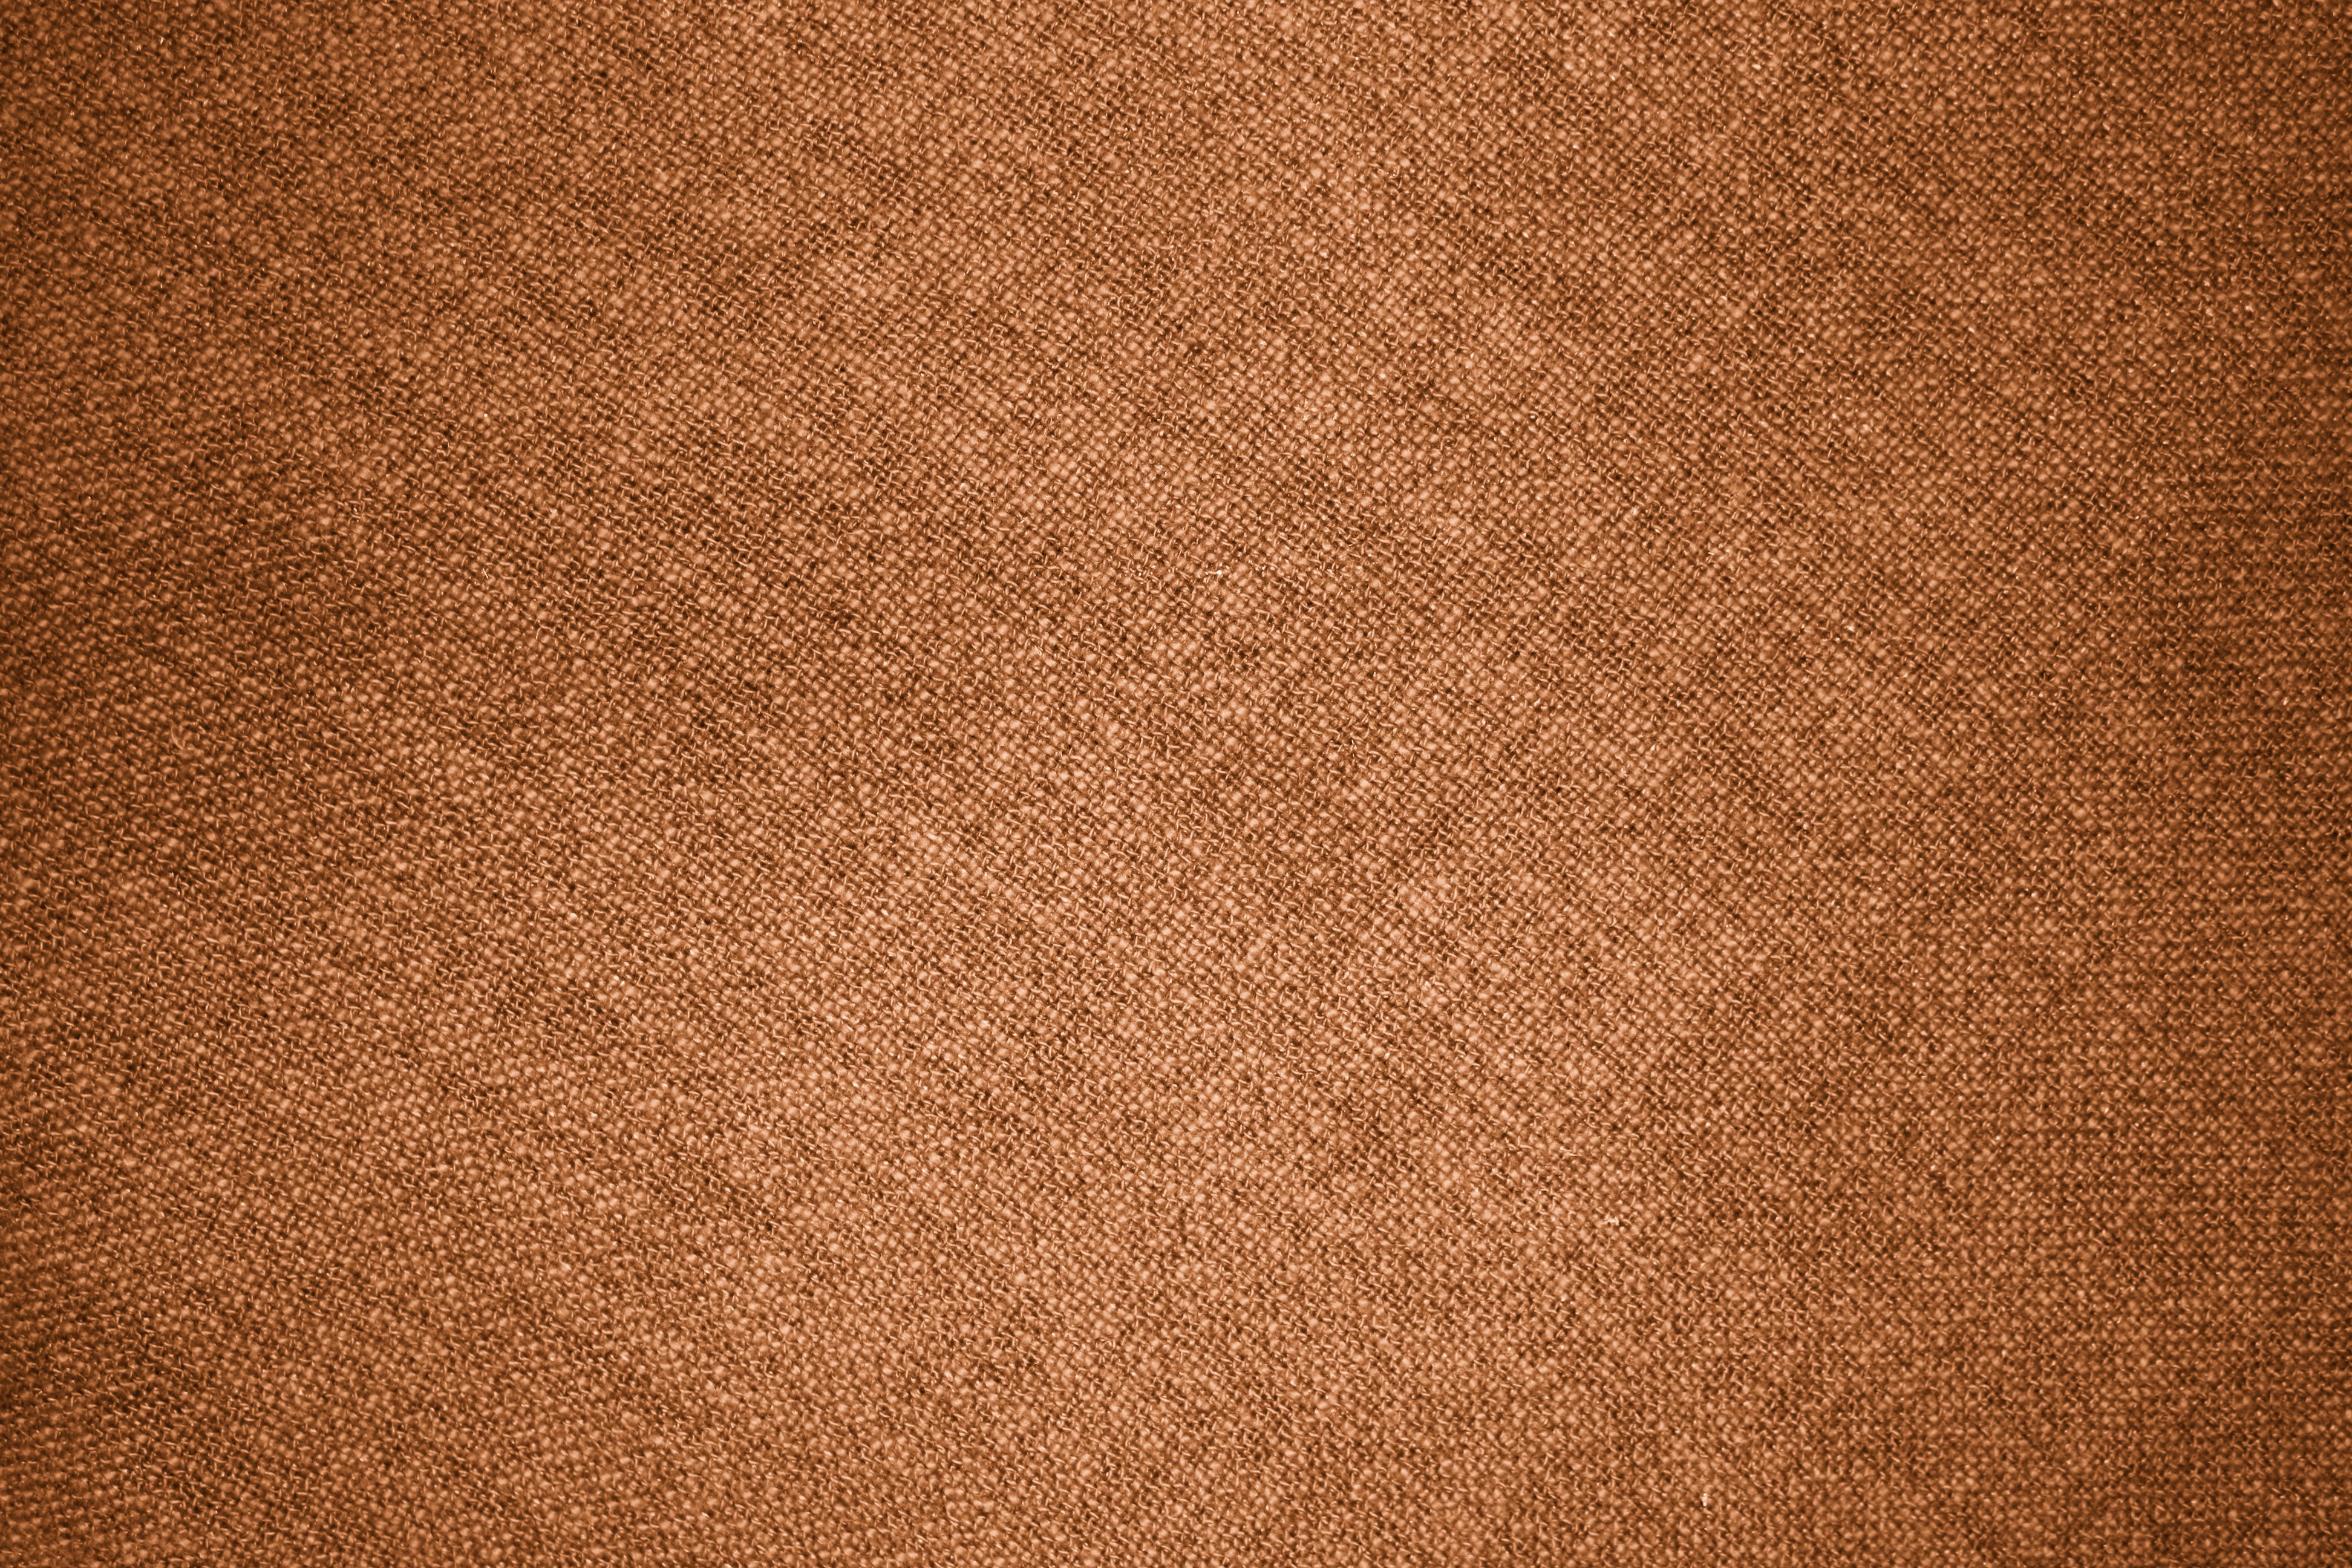 General 3888x2592 texture template minimalism brown